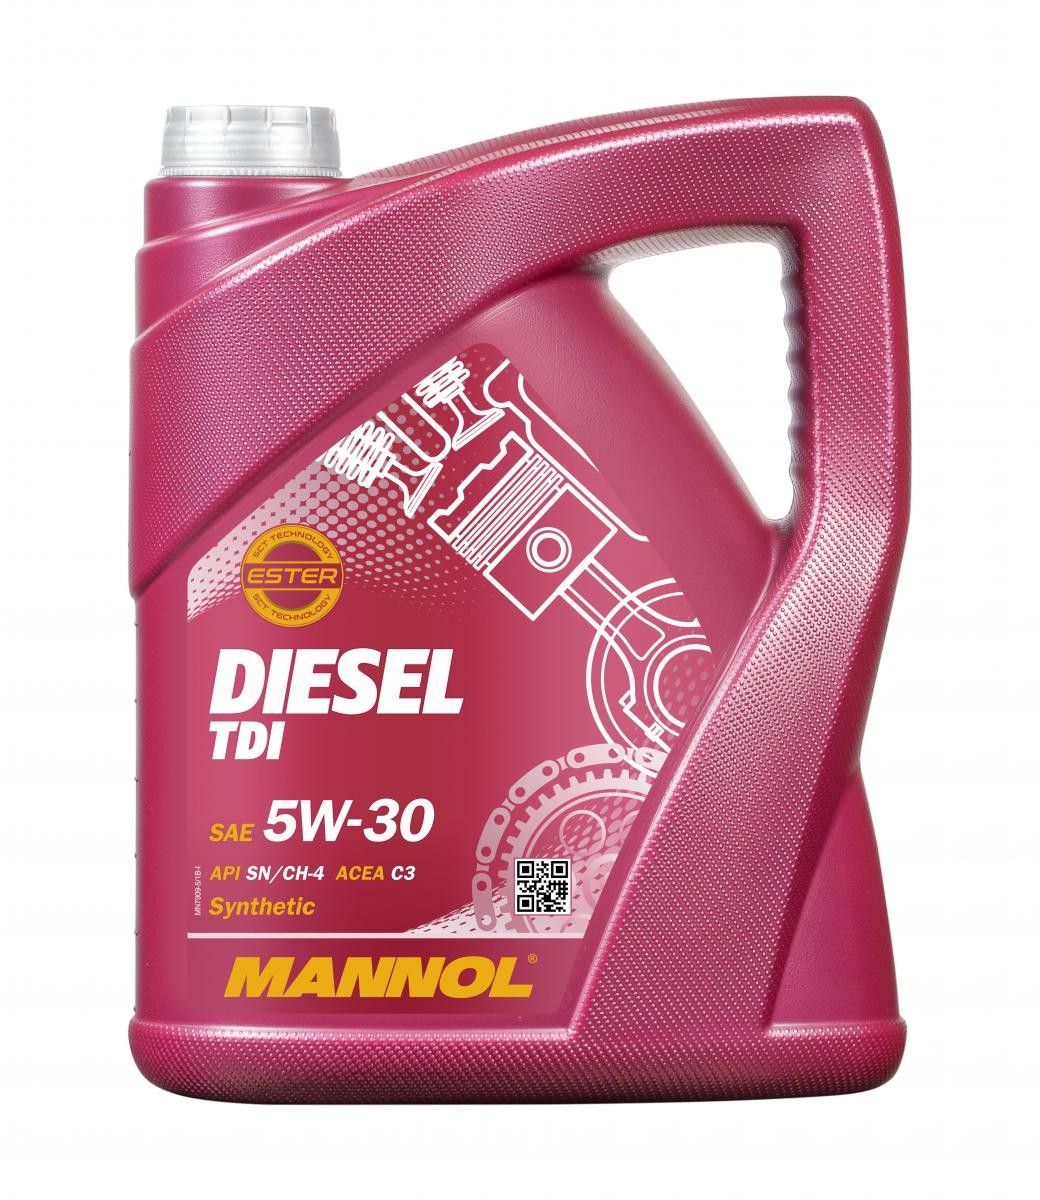 MN7909-5 MANNOL DIESEL TDI 5W-30, 5l, Synthetiköl Motoröl MN7909-5 günstig kaufen